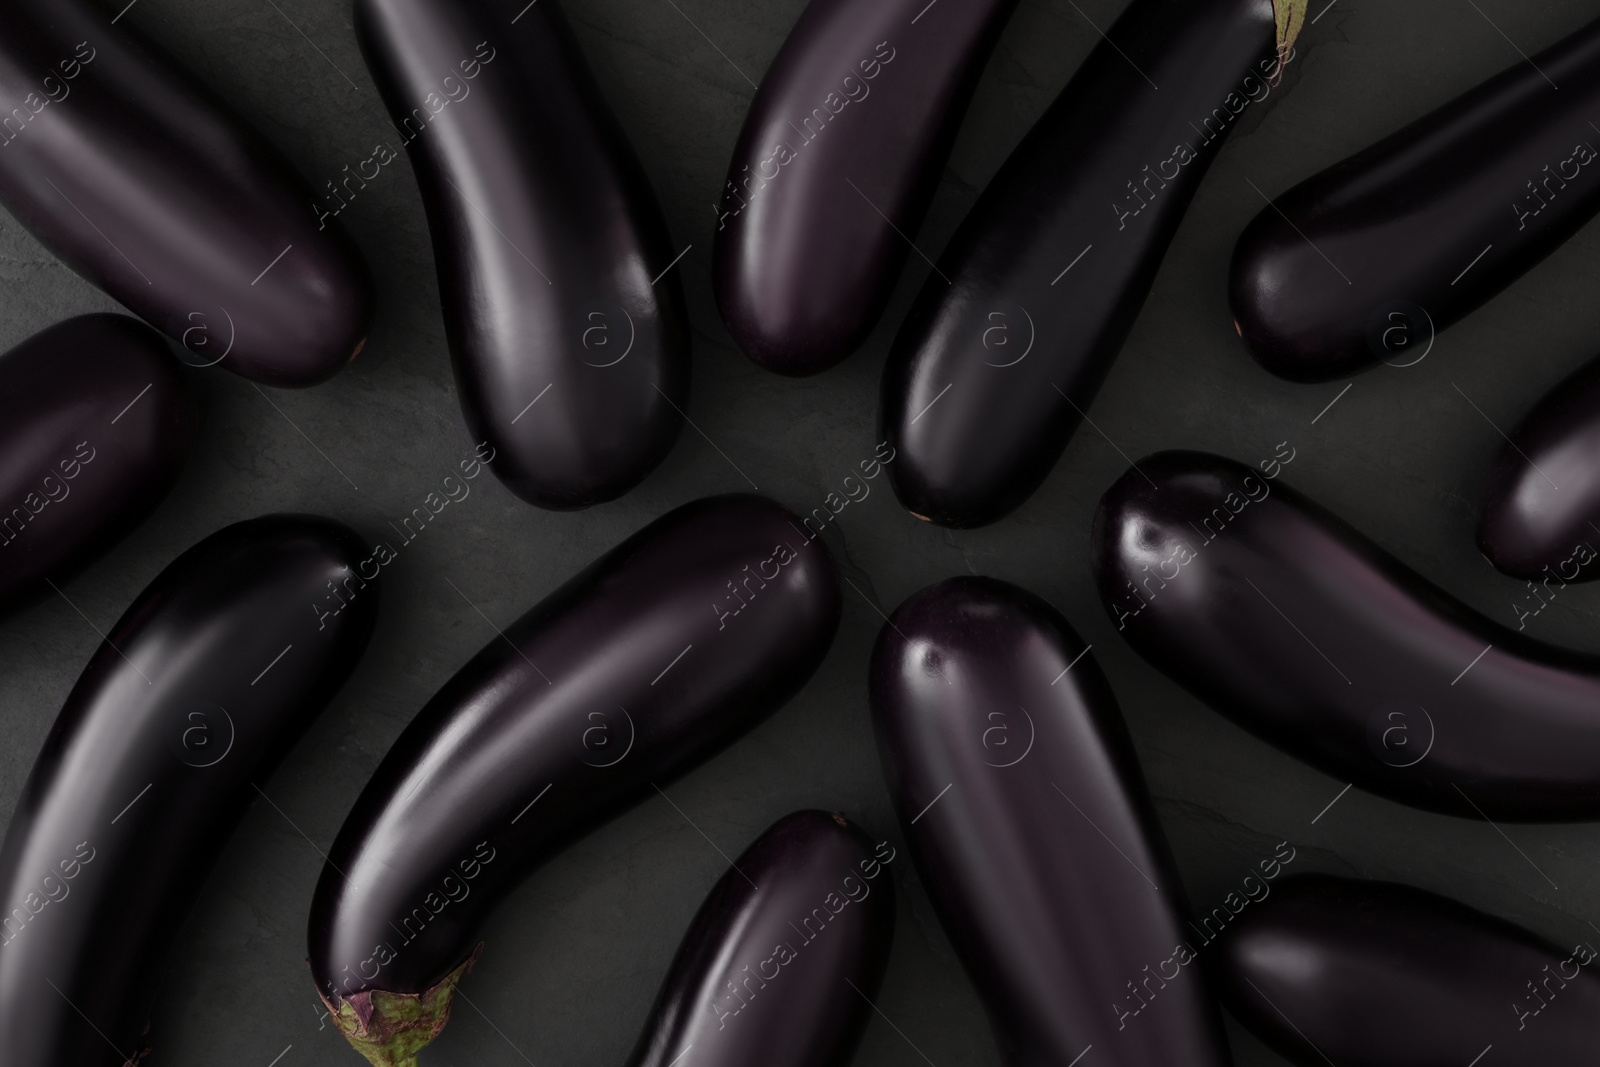 Photo of Raw ripe eggplants on black table, flat lay